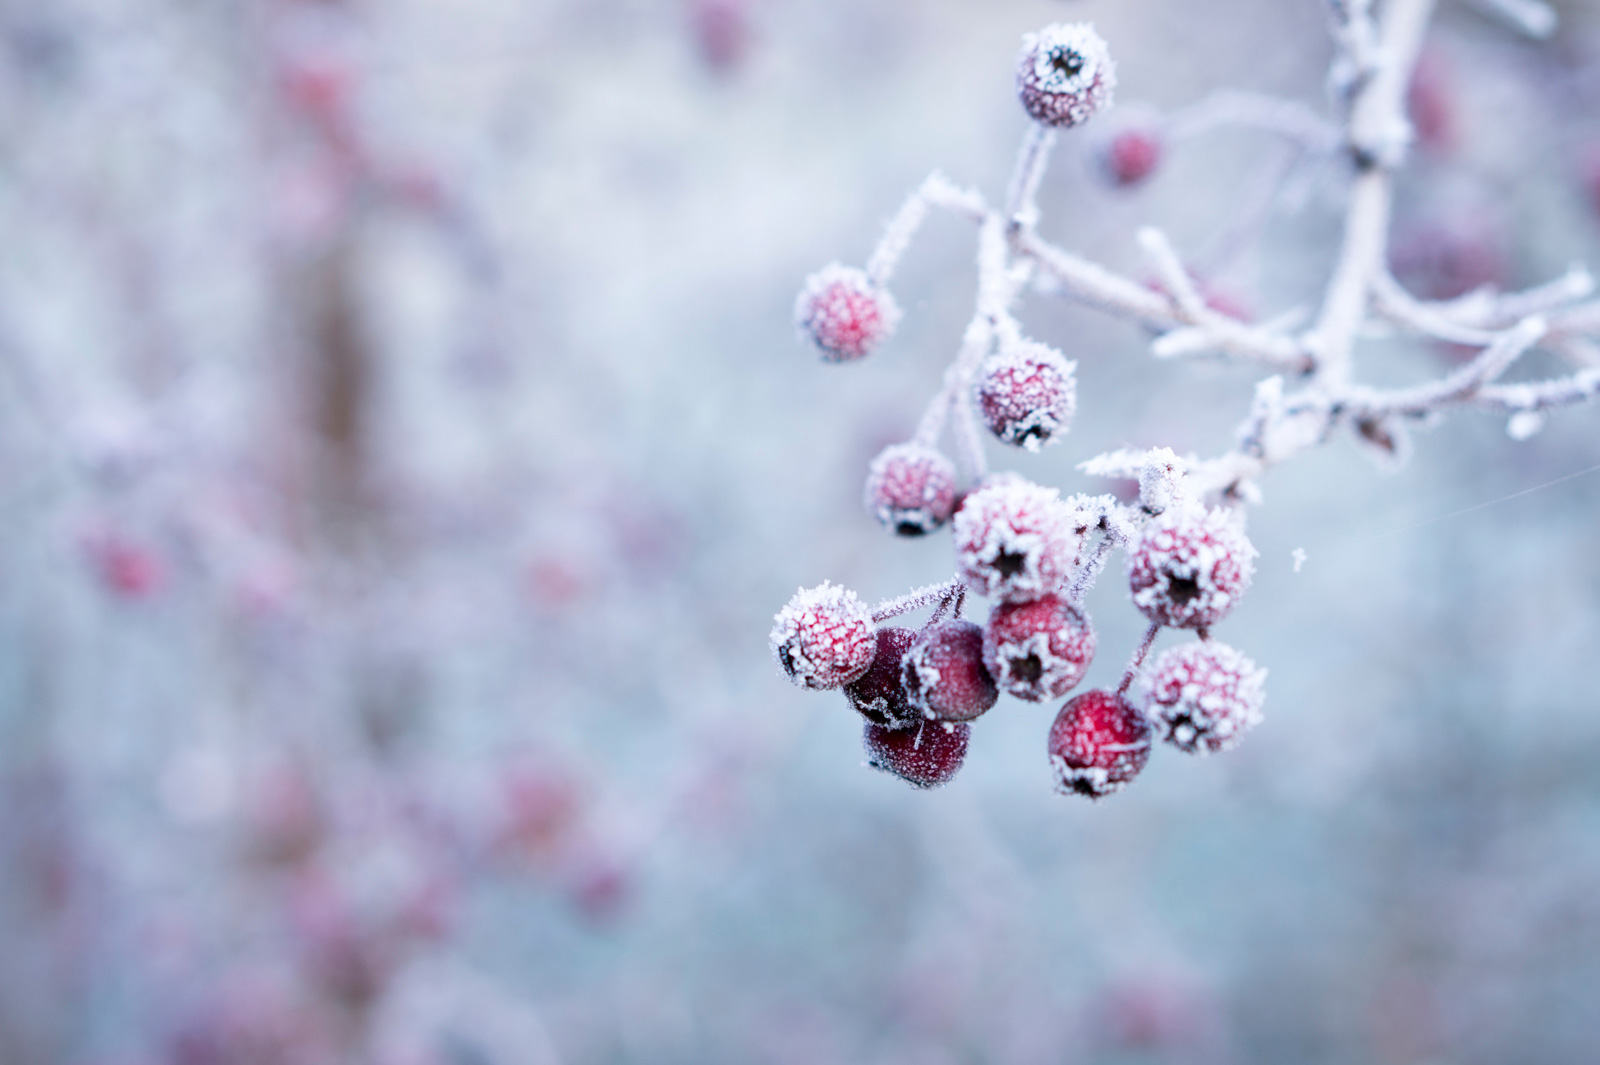 Hängen gebliebenen Beeren bieten Vöglen im Winter Nahrung. 